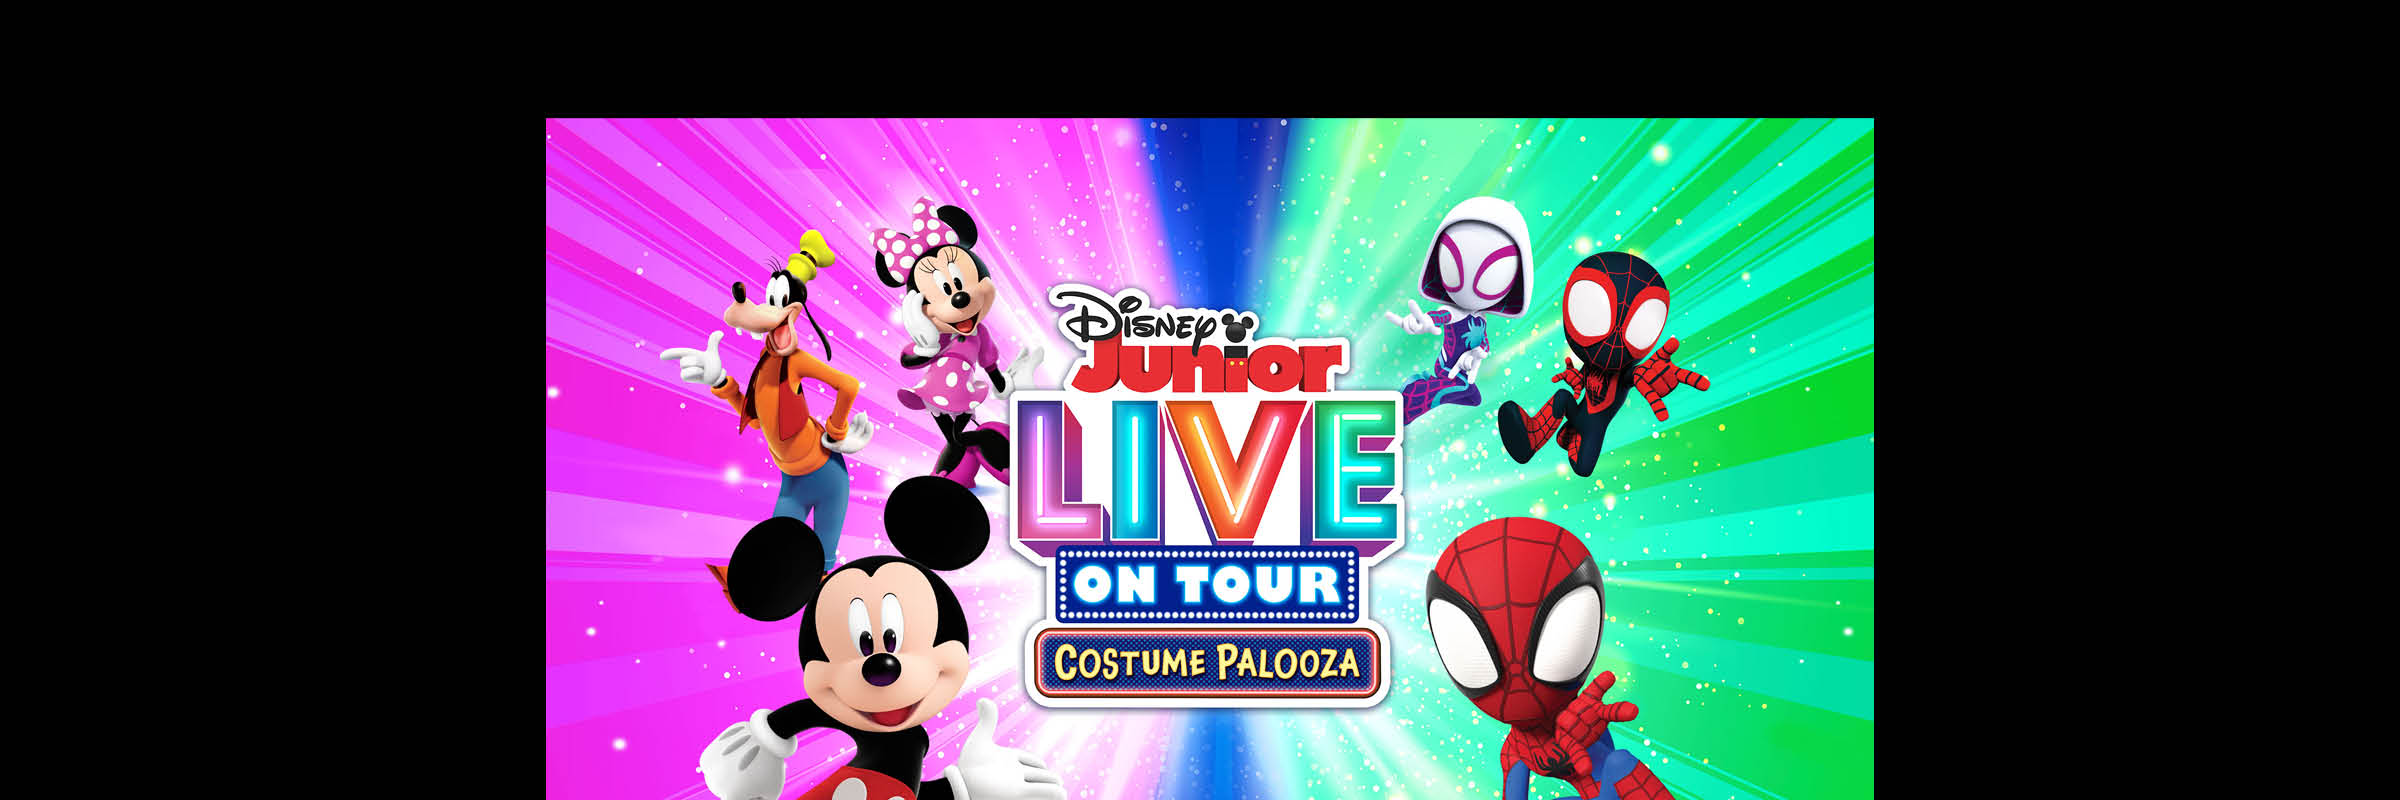 Disney Junior Live: Costume Palooza